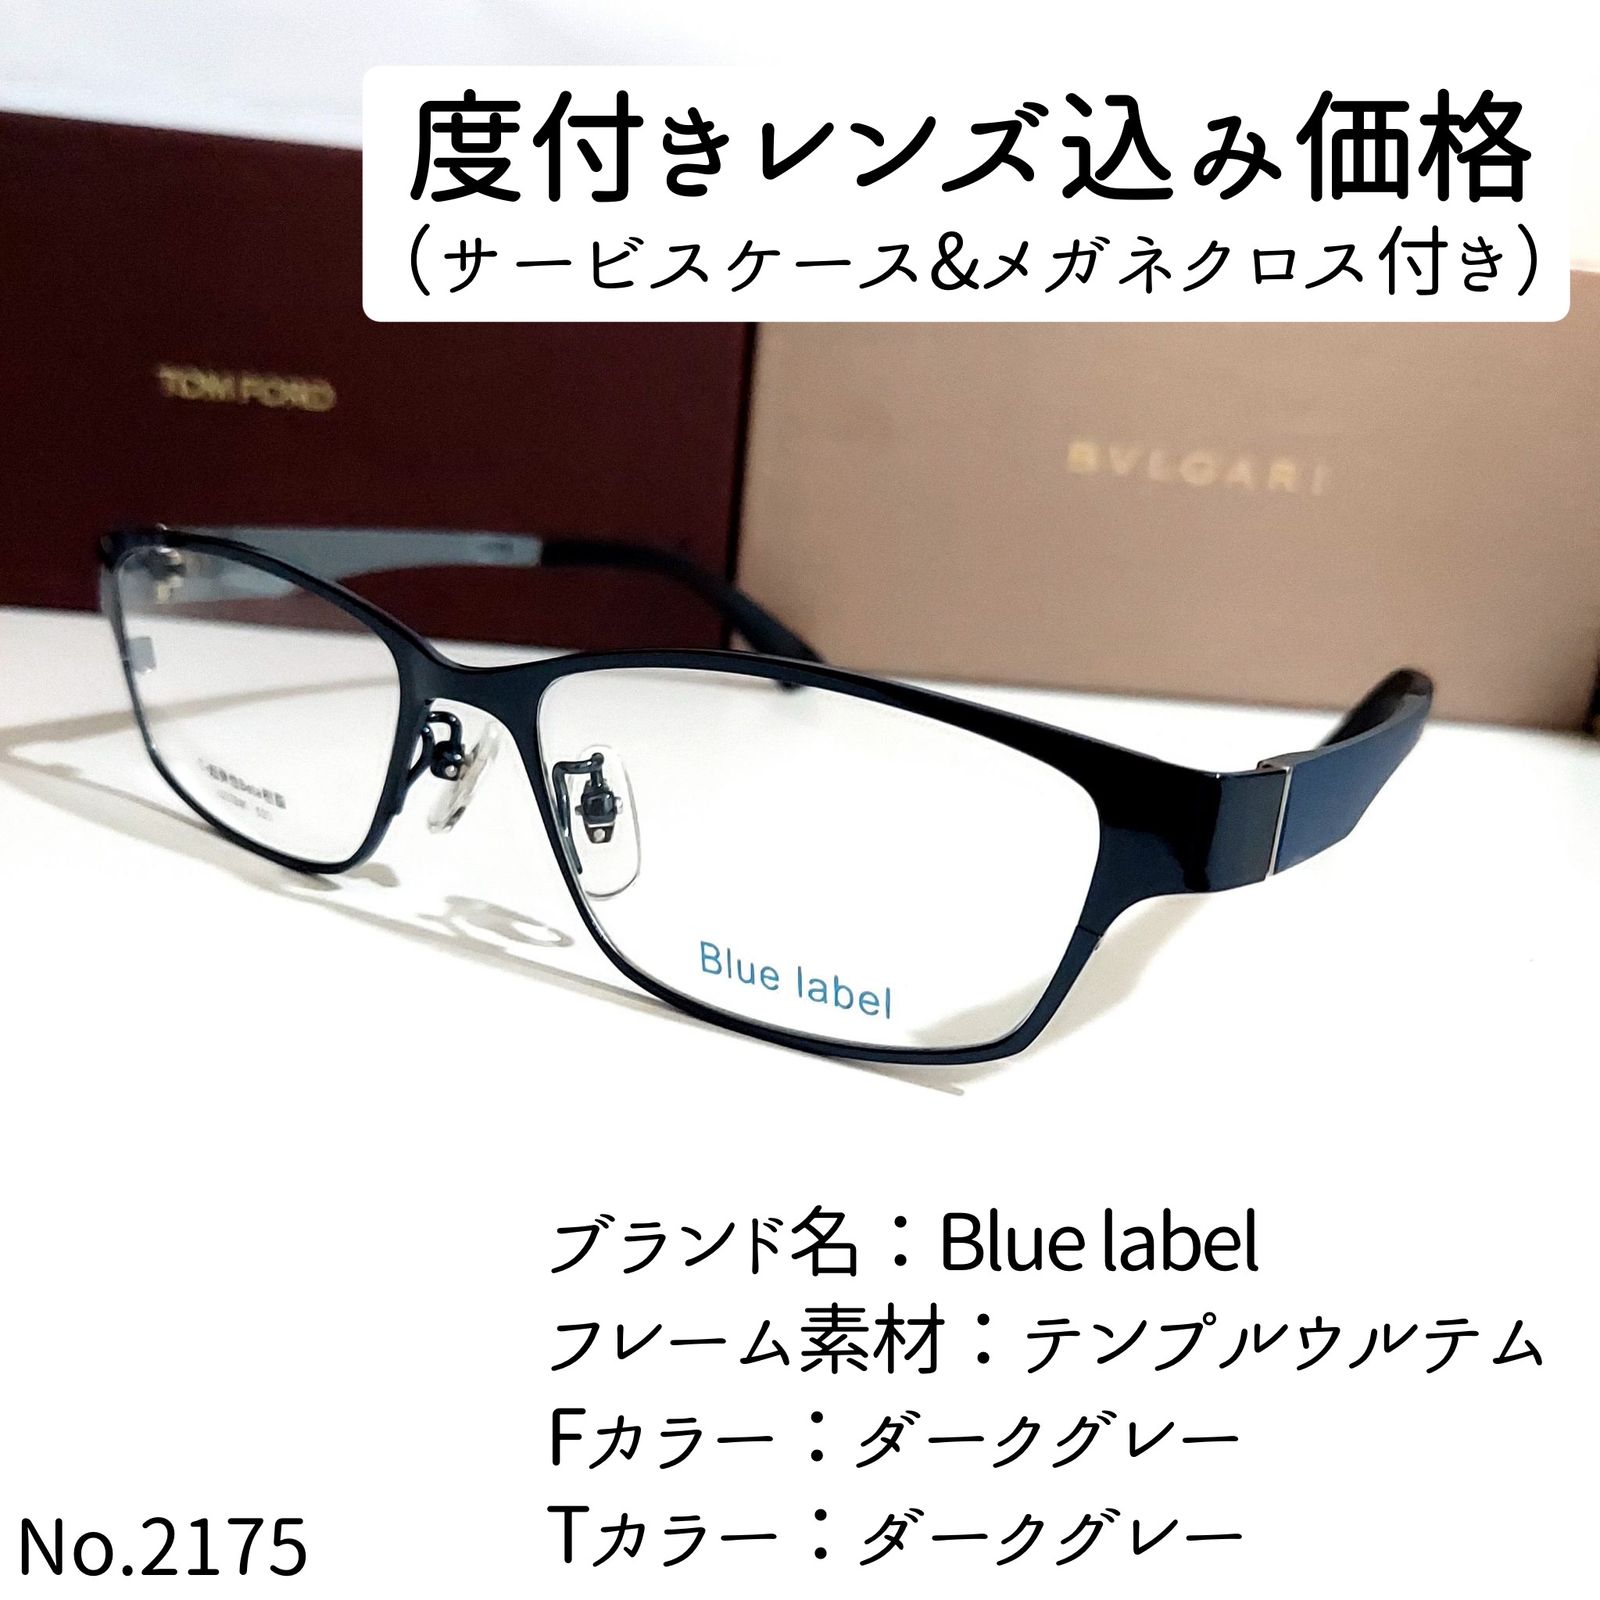 No.2485+メガネ Blue label【度数入り込み価格】-